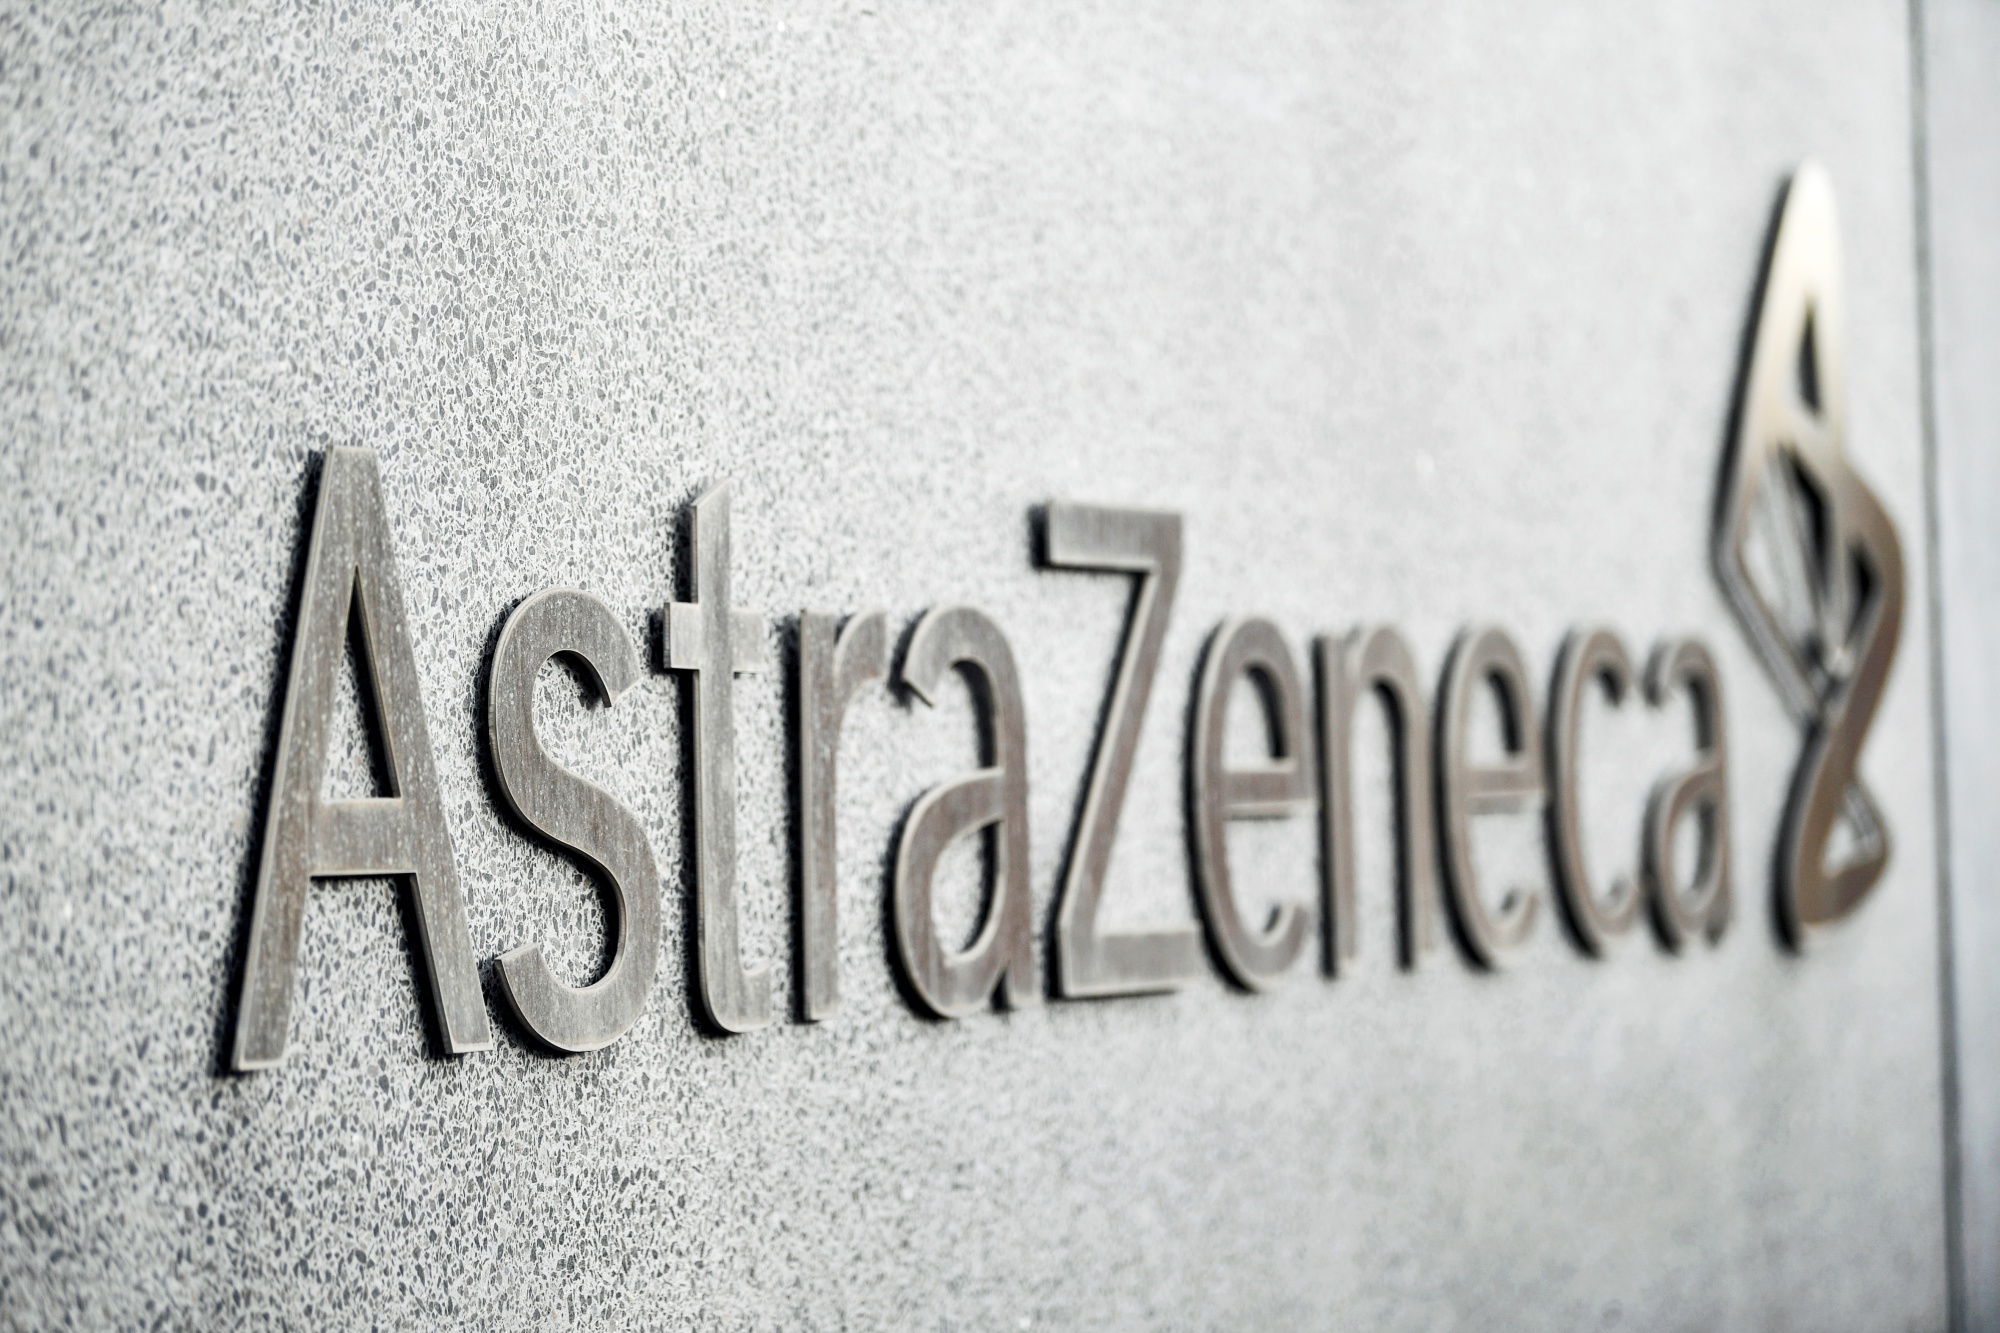 AstraZeneca Plc Raises Sales Forecast as New Cancer Treatments Gain